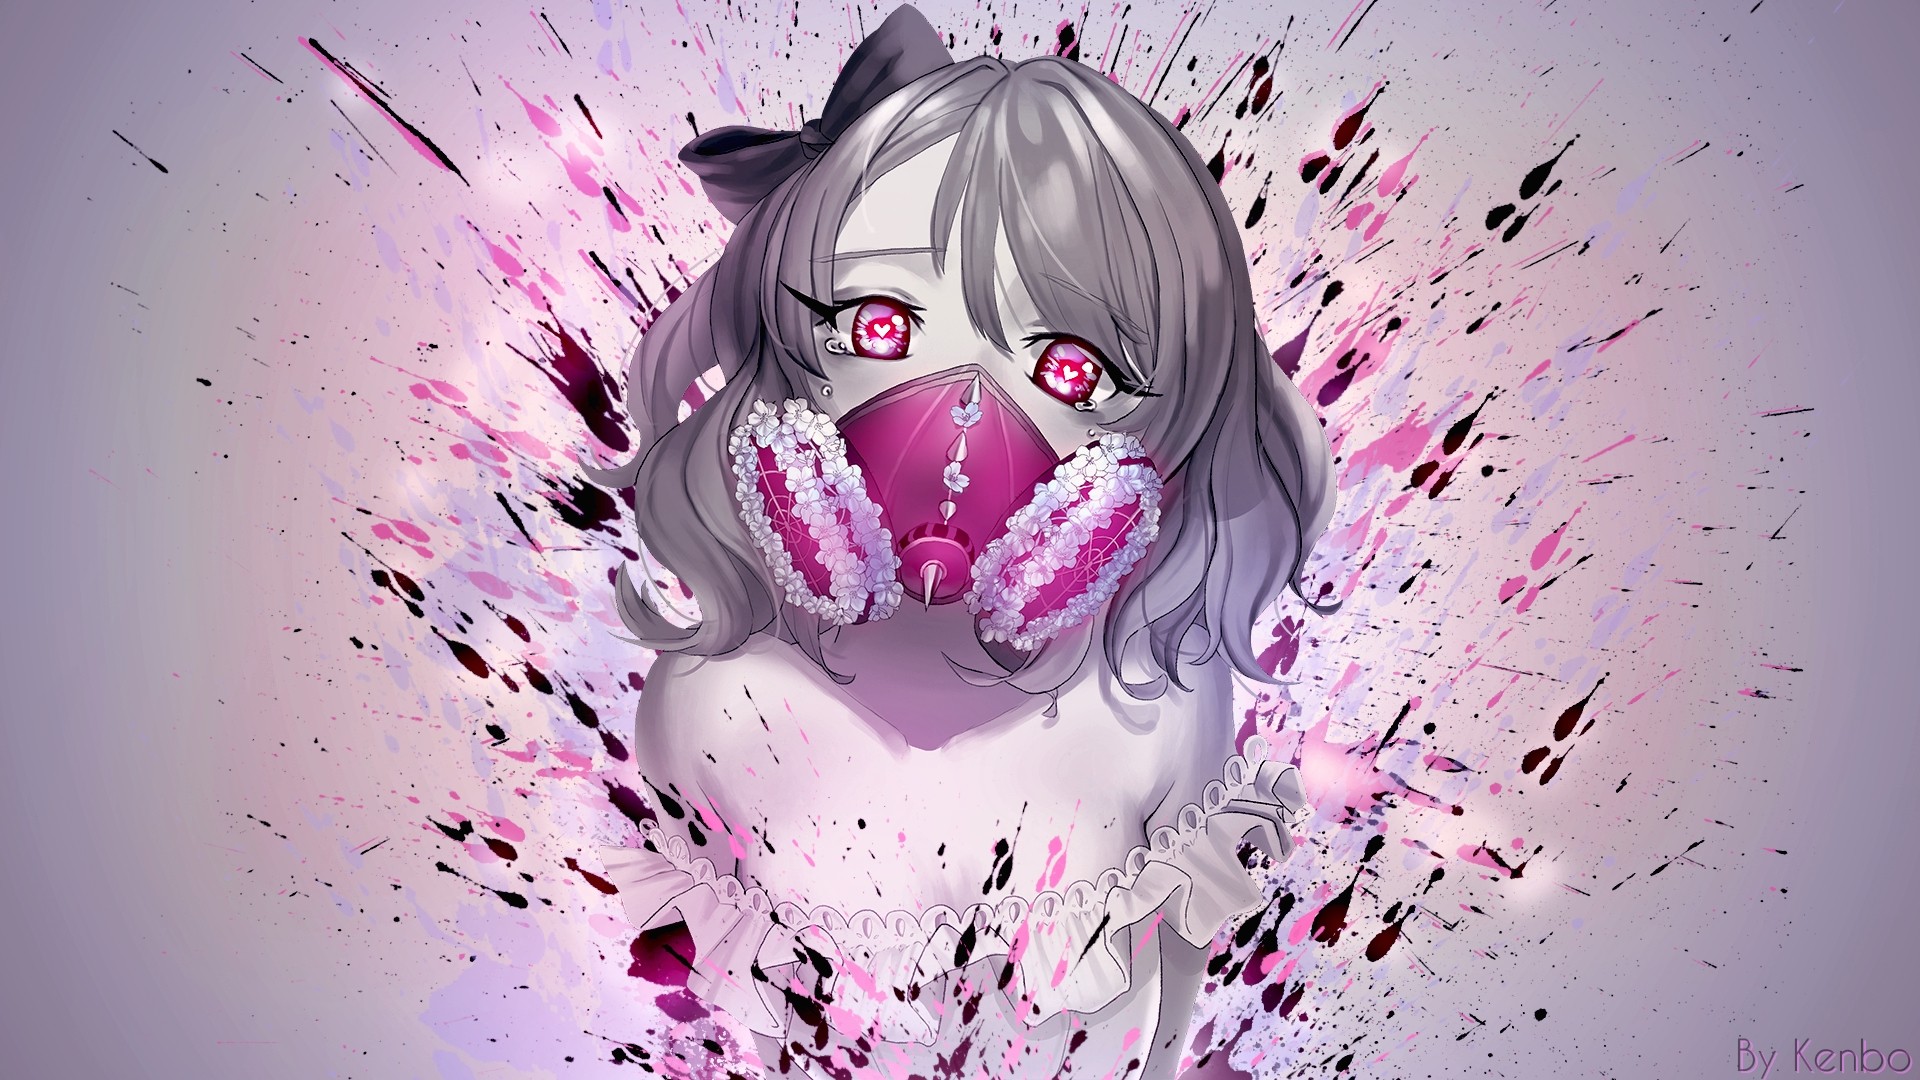 Anime Girl With Gas Mask Wallpaper image hd